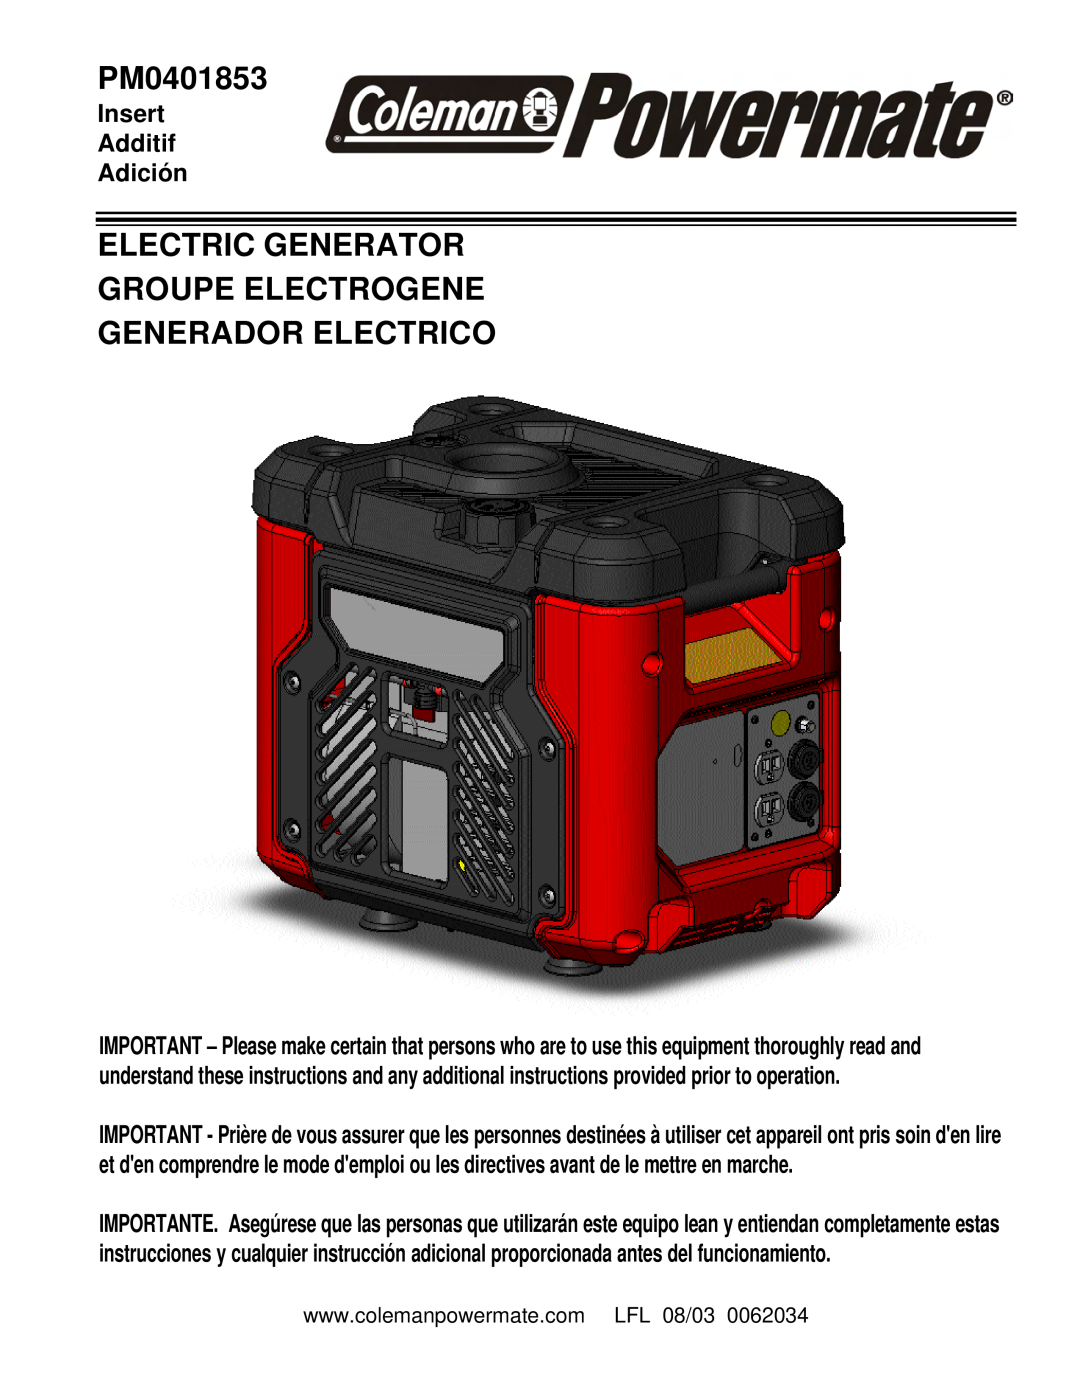 Powermate PM0401853 manual Electric Generator Groupe Electrogene, Generador Electrico, Insert Additif Adición 